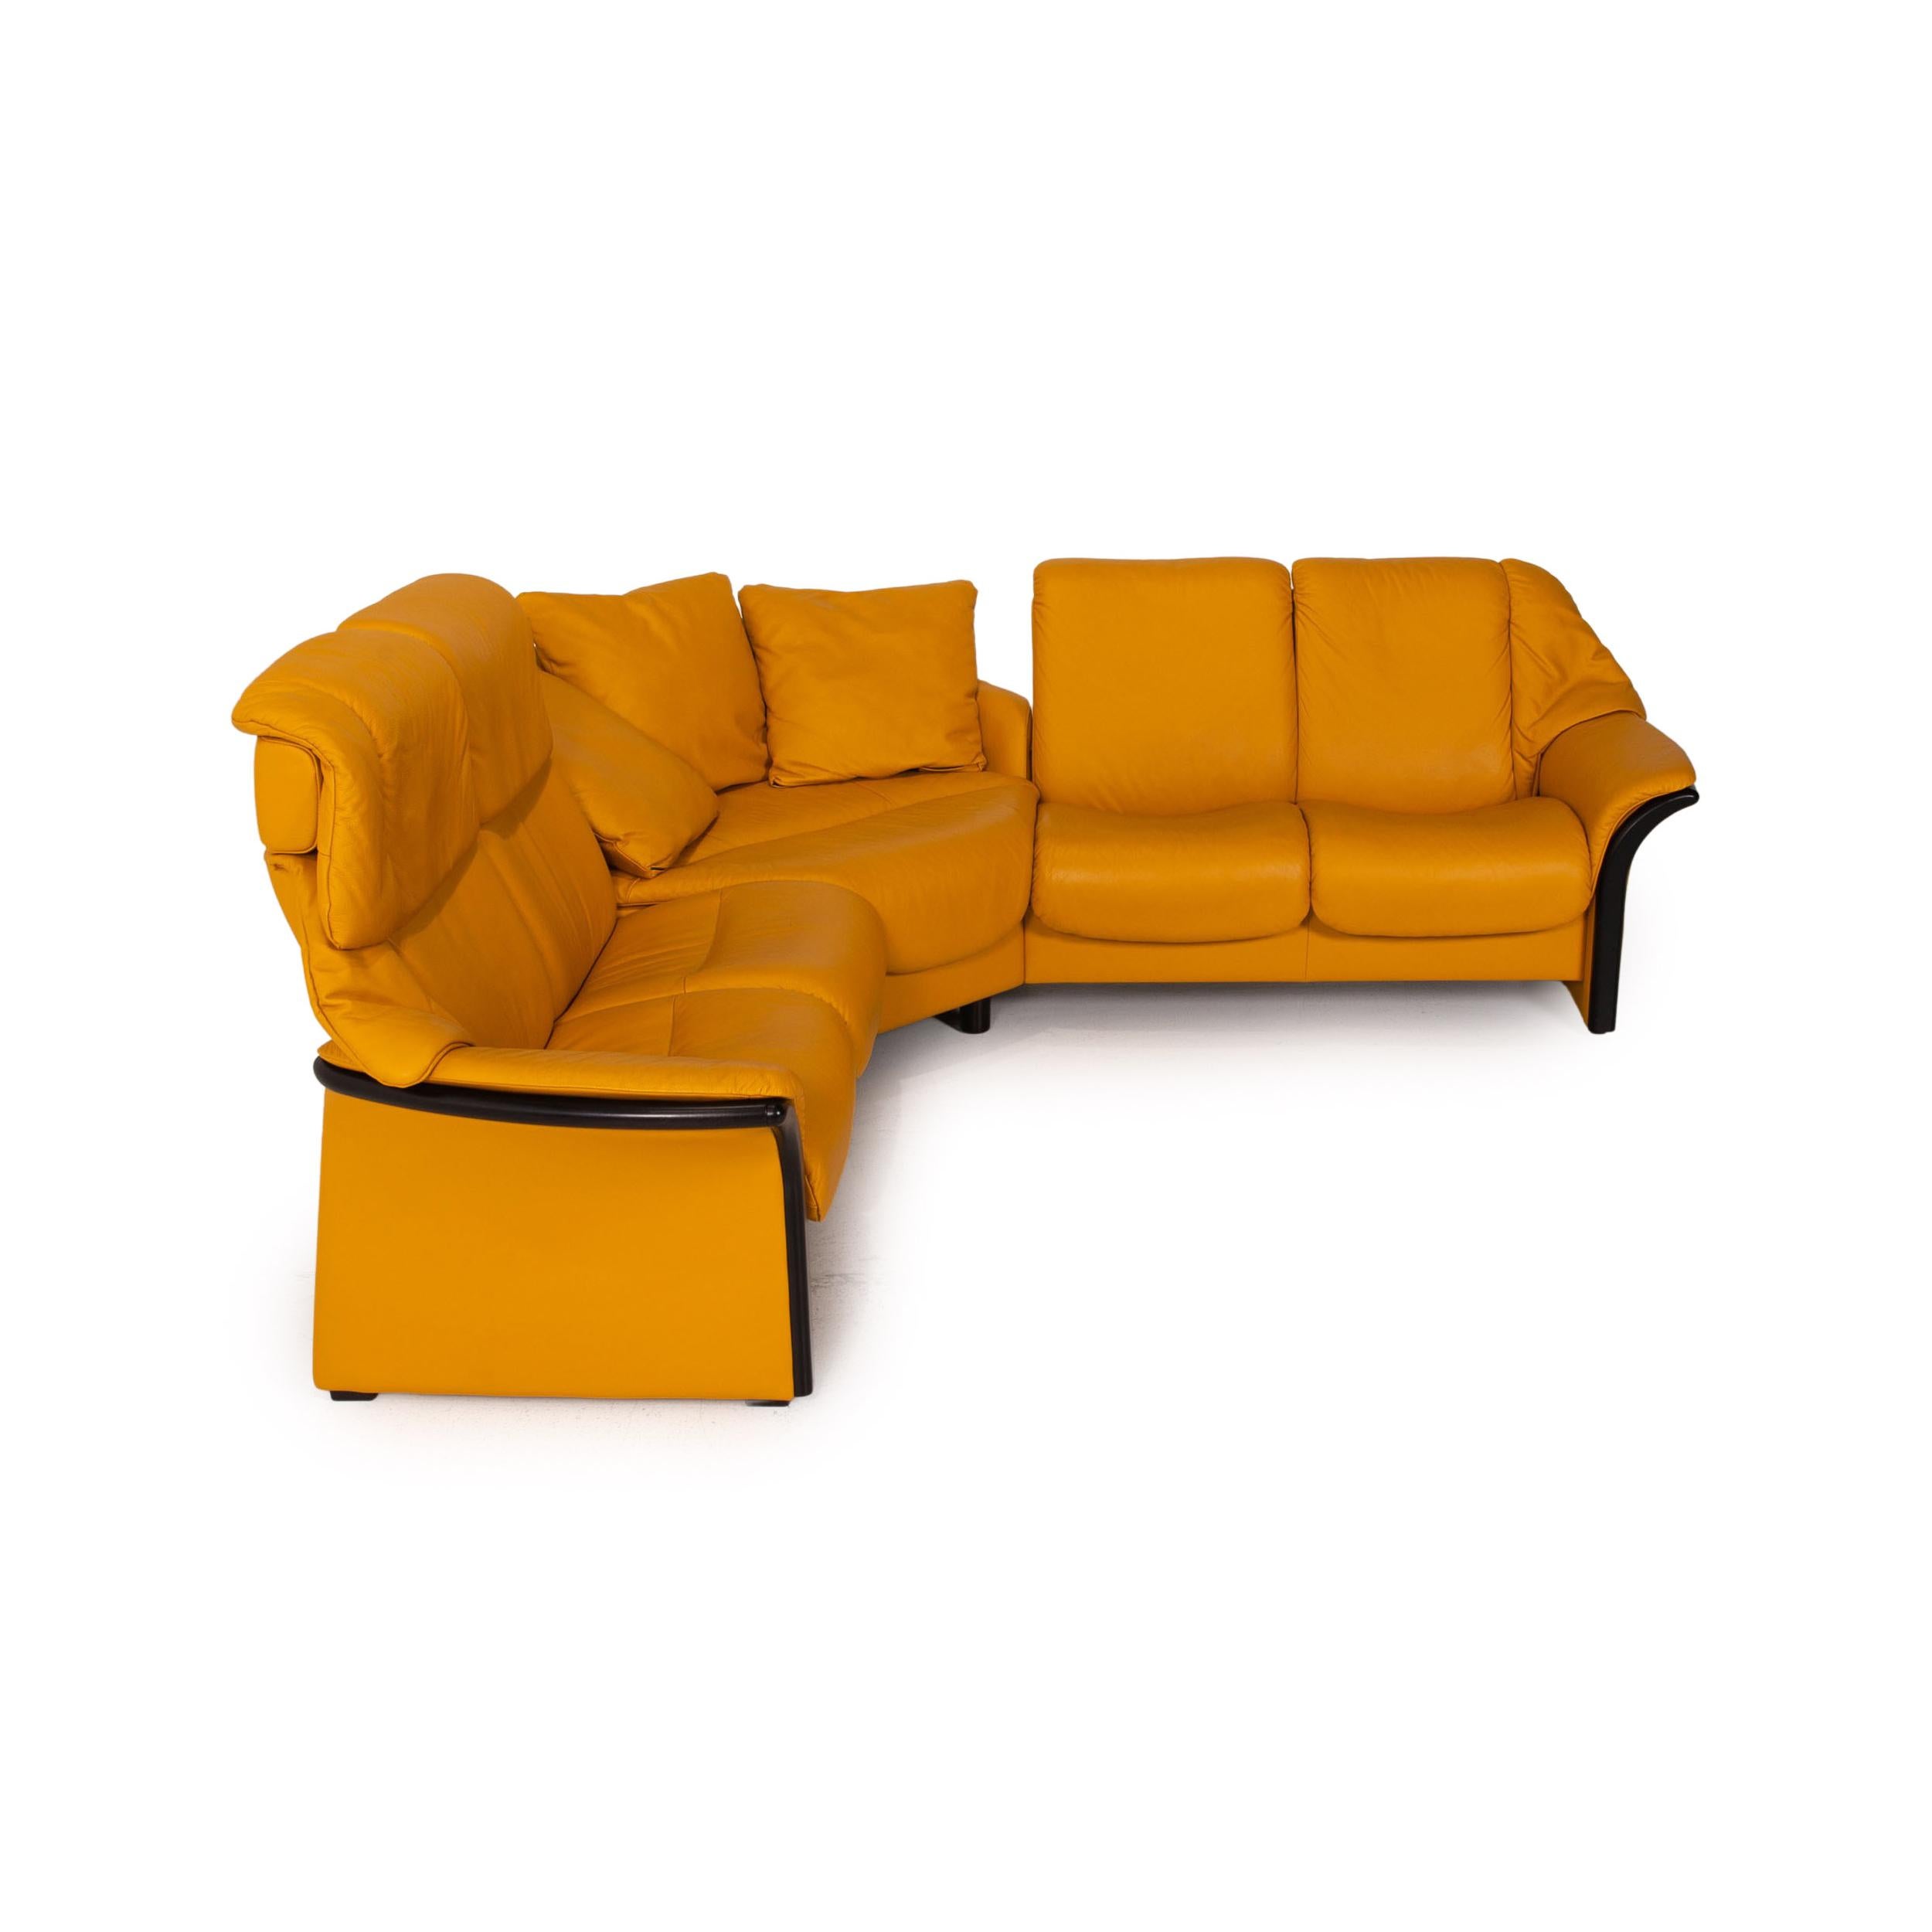 Stressless Eldorado Leather Corner Sofa Yellow Relax Function Sofa Couch 5